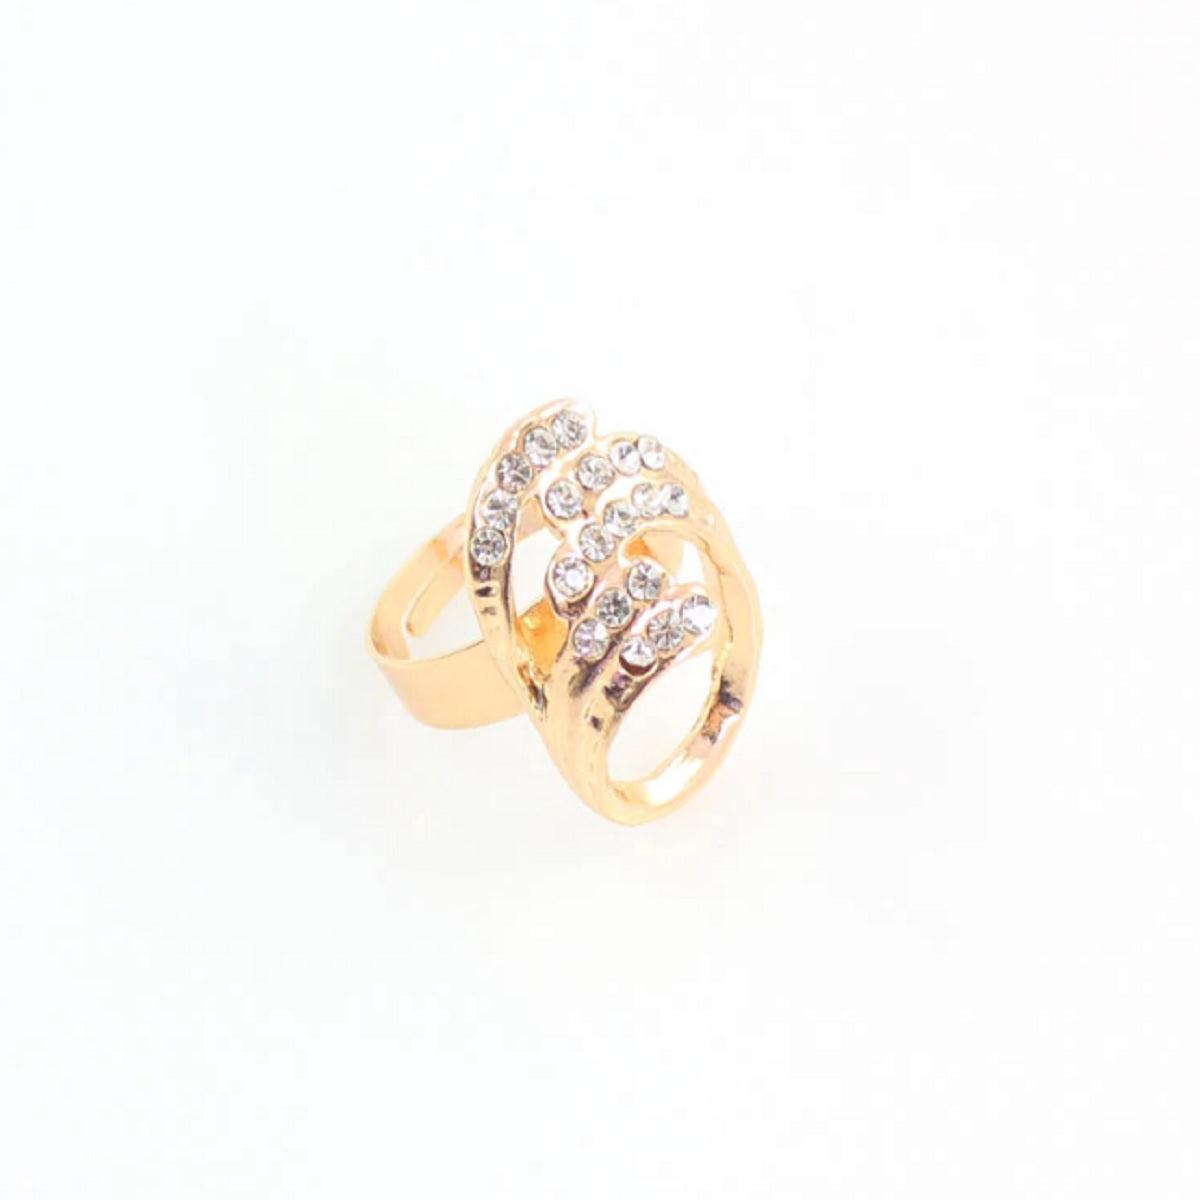 Carol Jewelry Women's Gold Finished Necklace Set - Multi Rope - dealskart.com.au